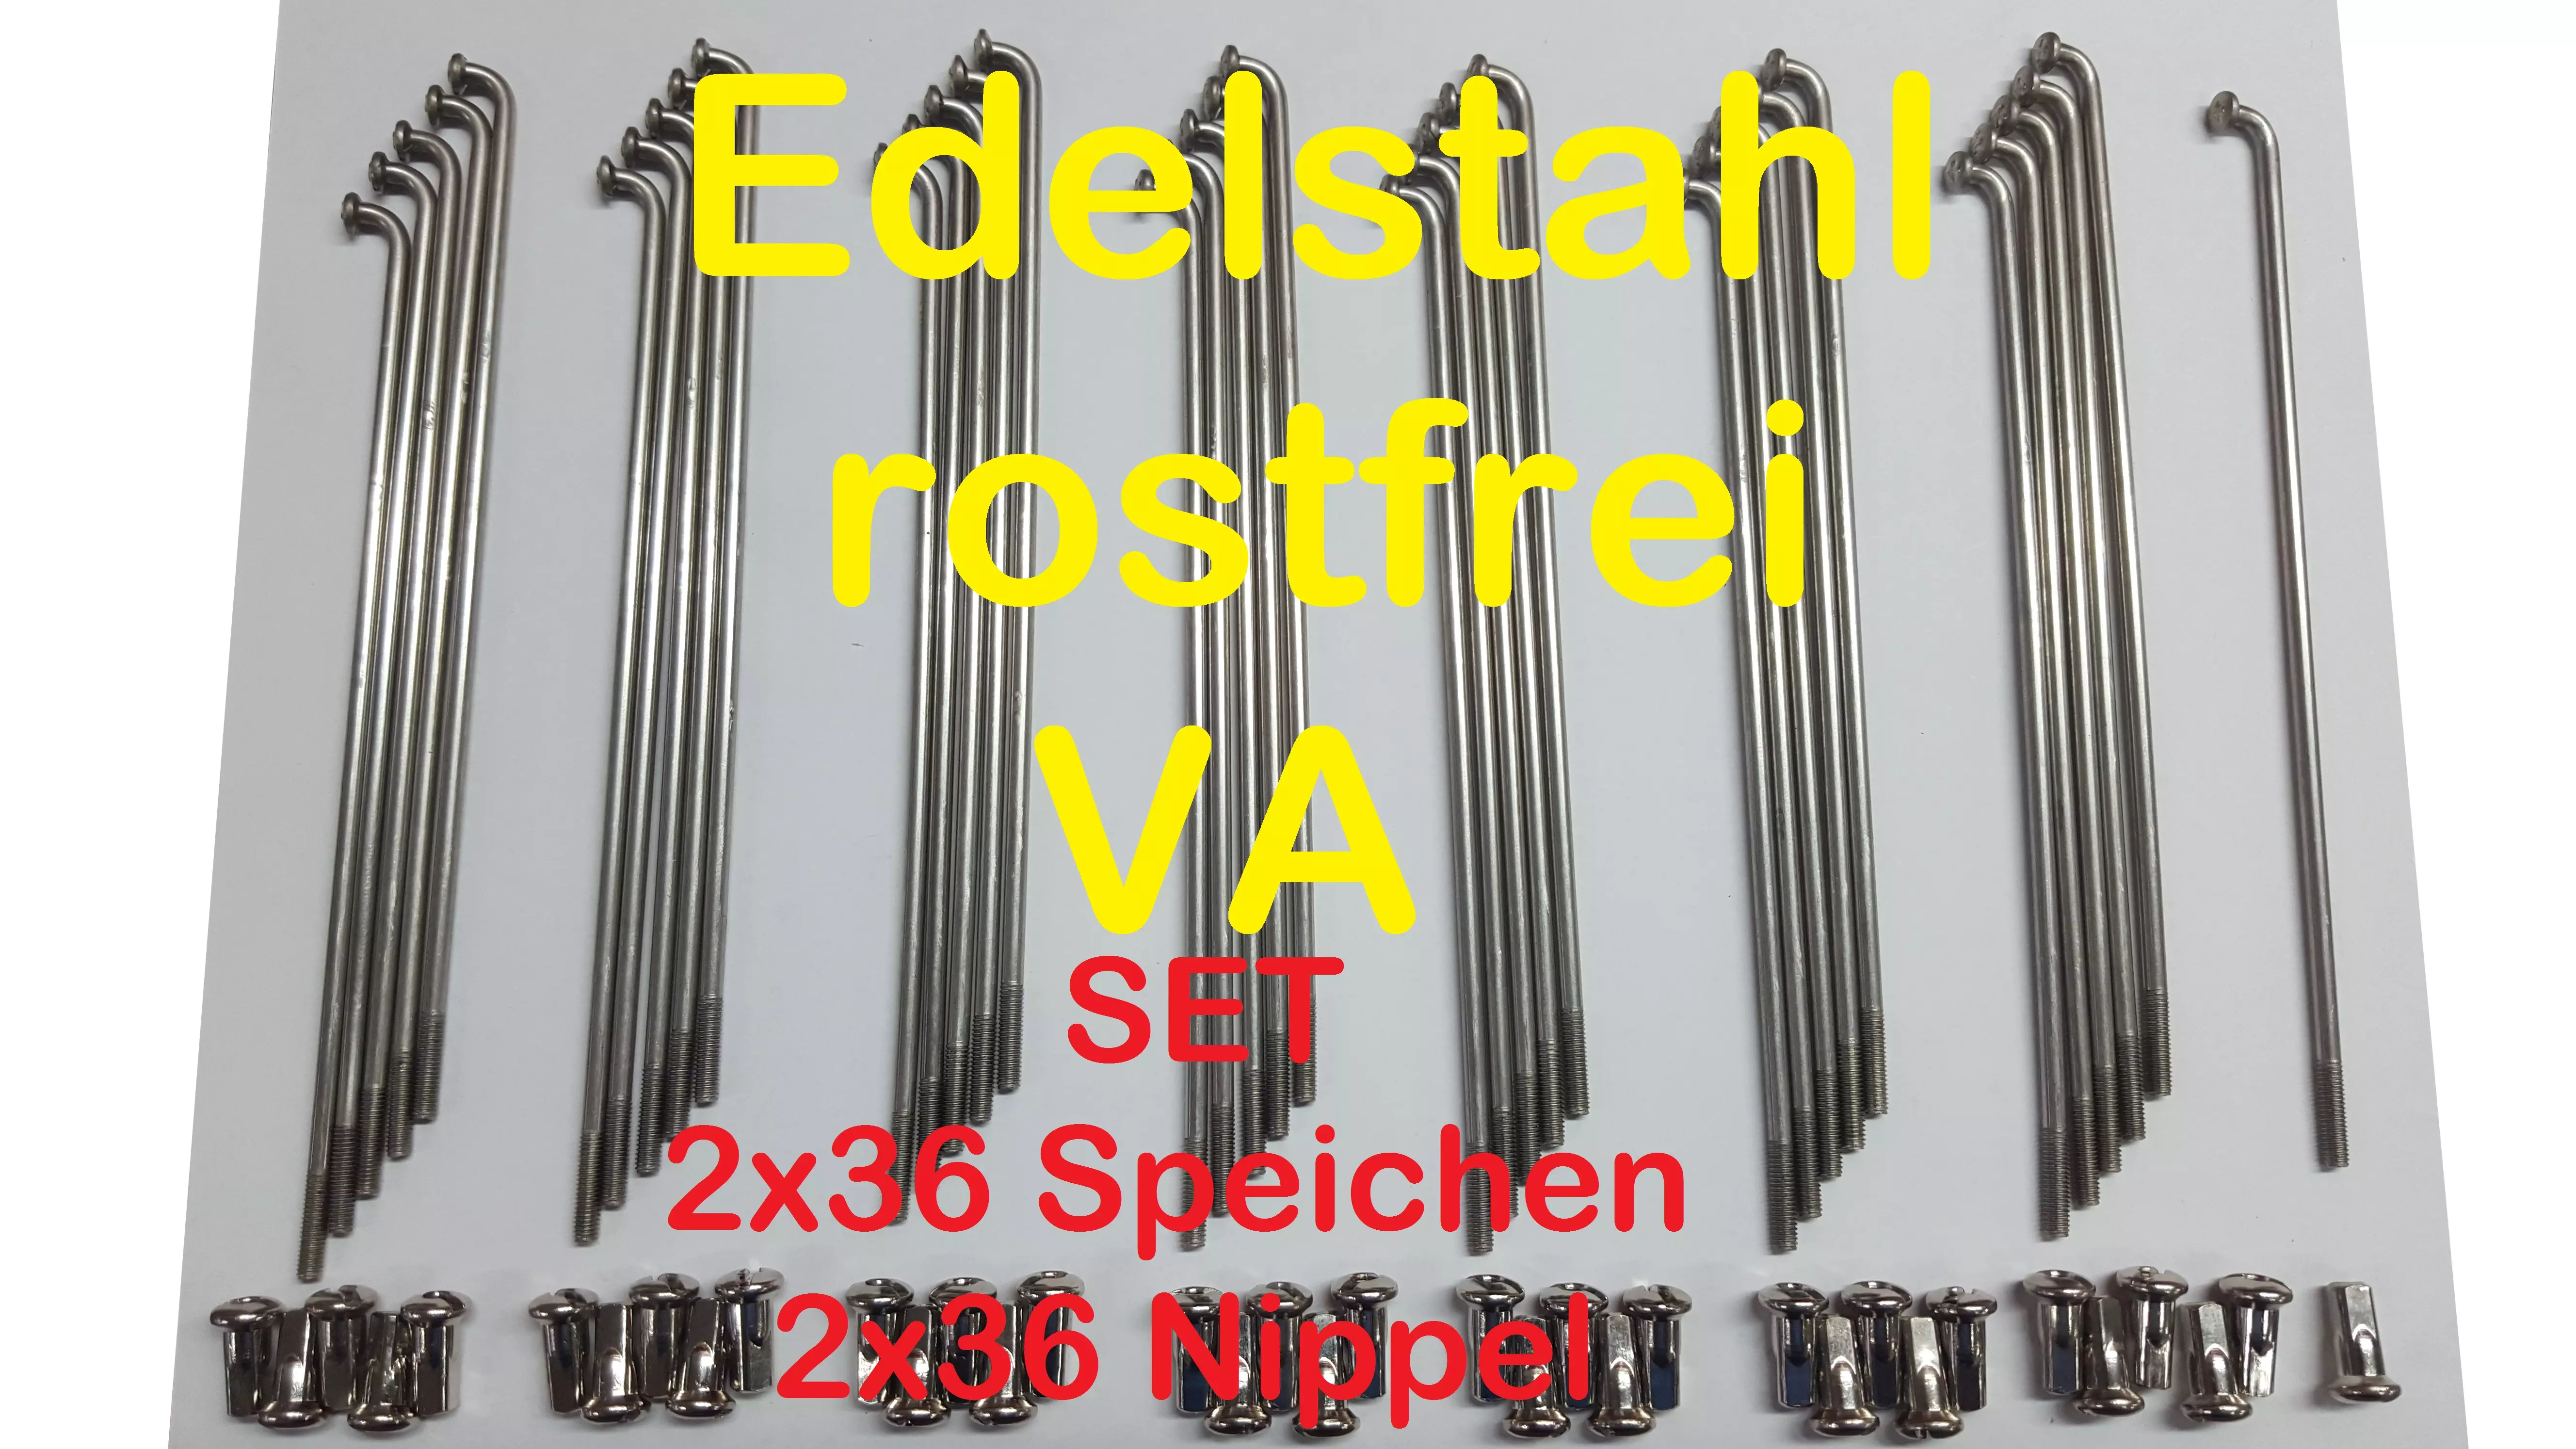 SET Speichensatz m. Nippel 143,5 mm 2x36 Stück Edelstahl S51